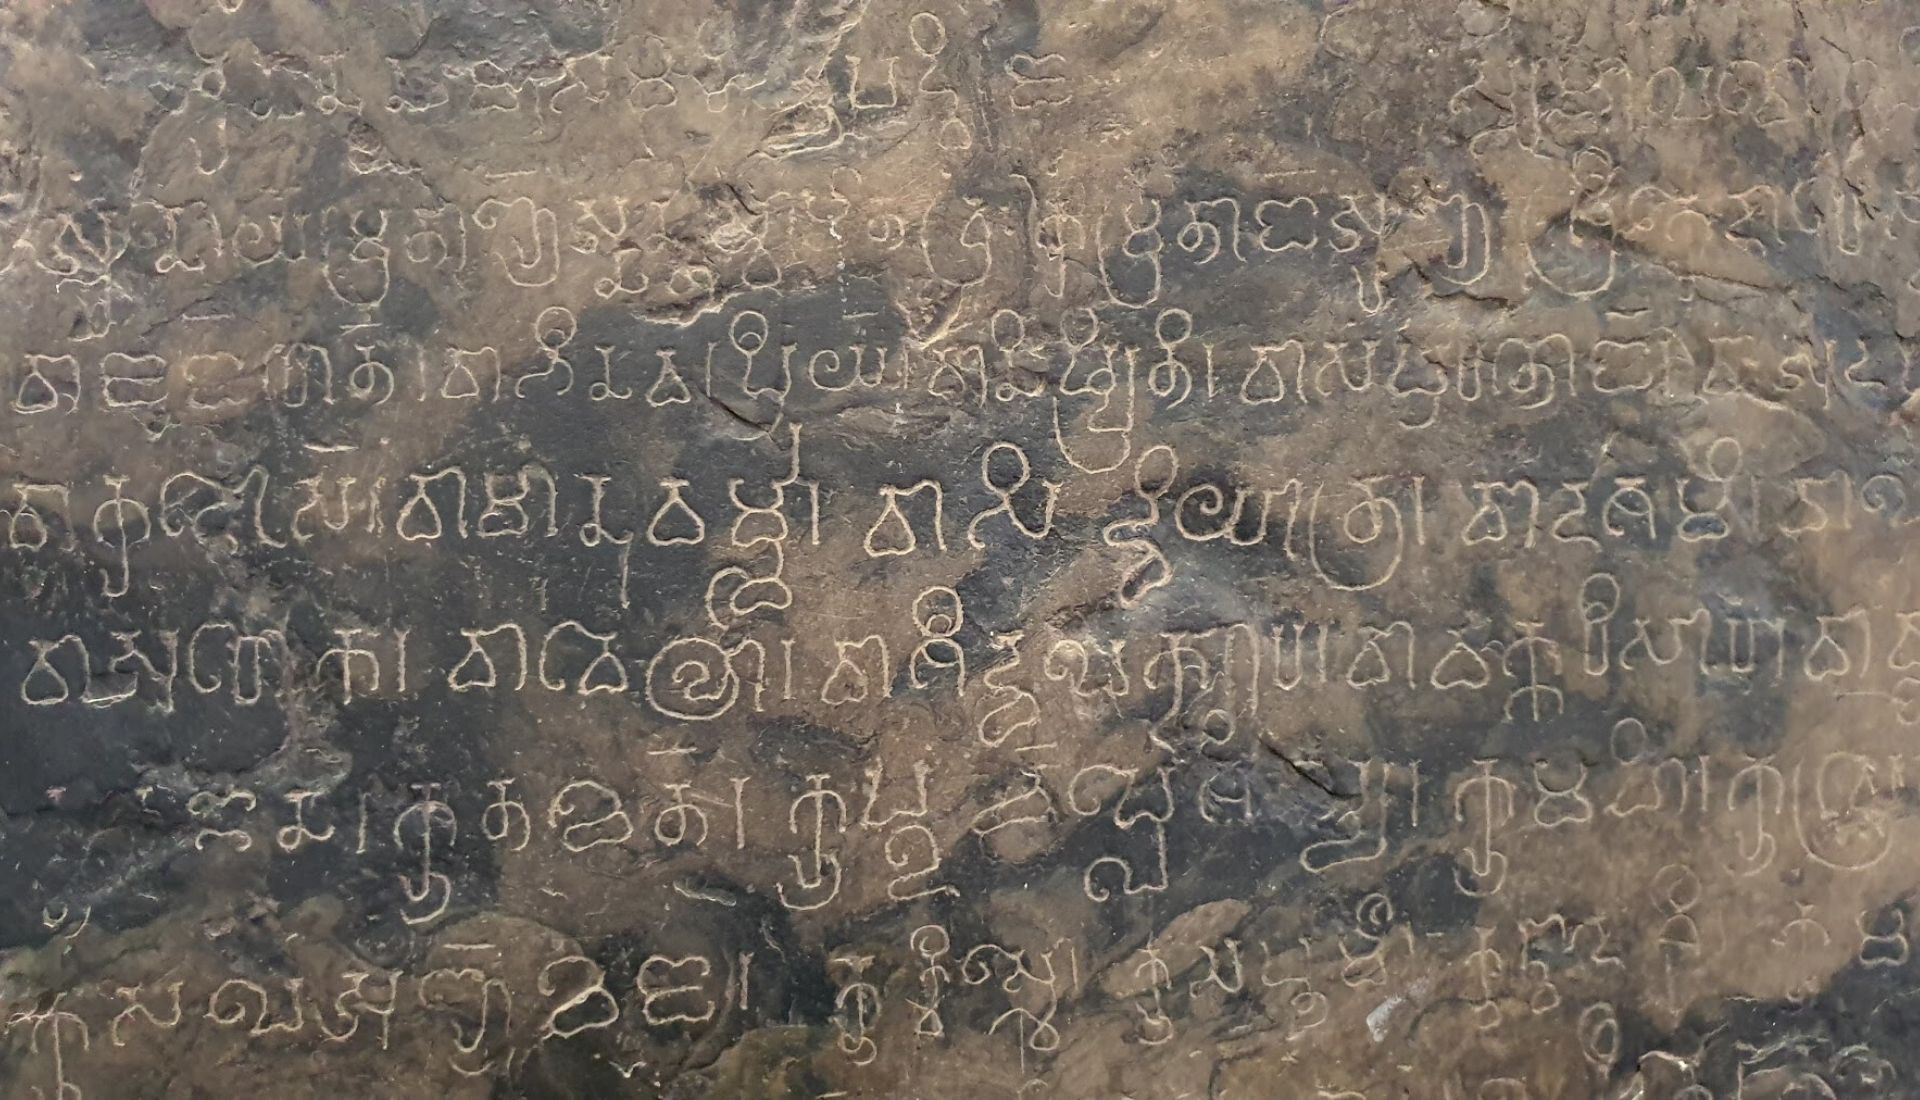 6th century sandstone tablet